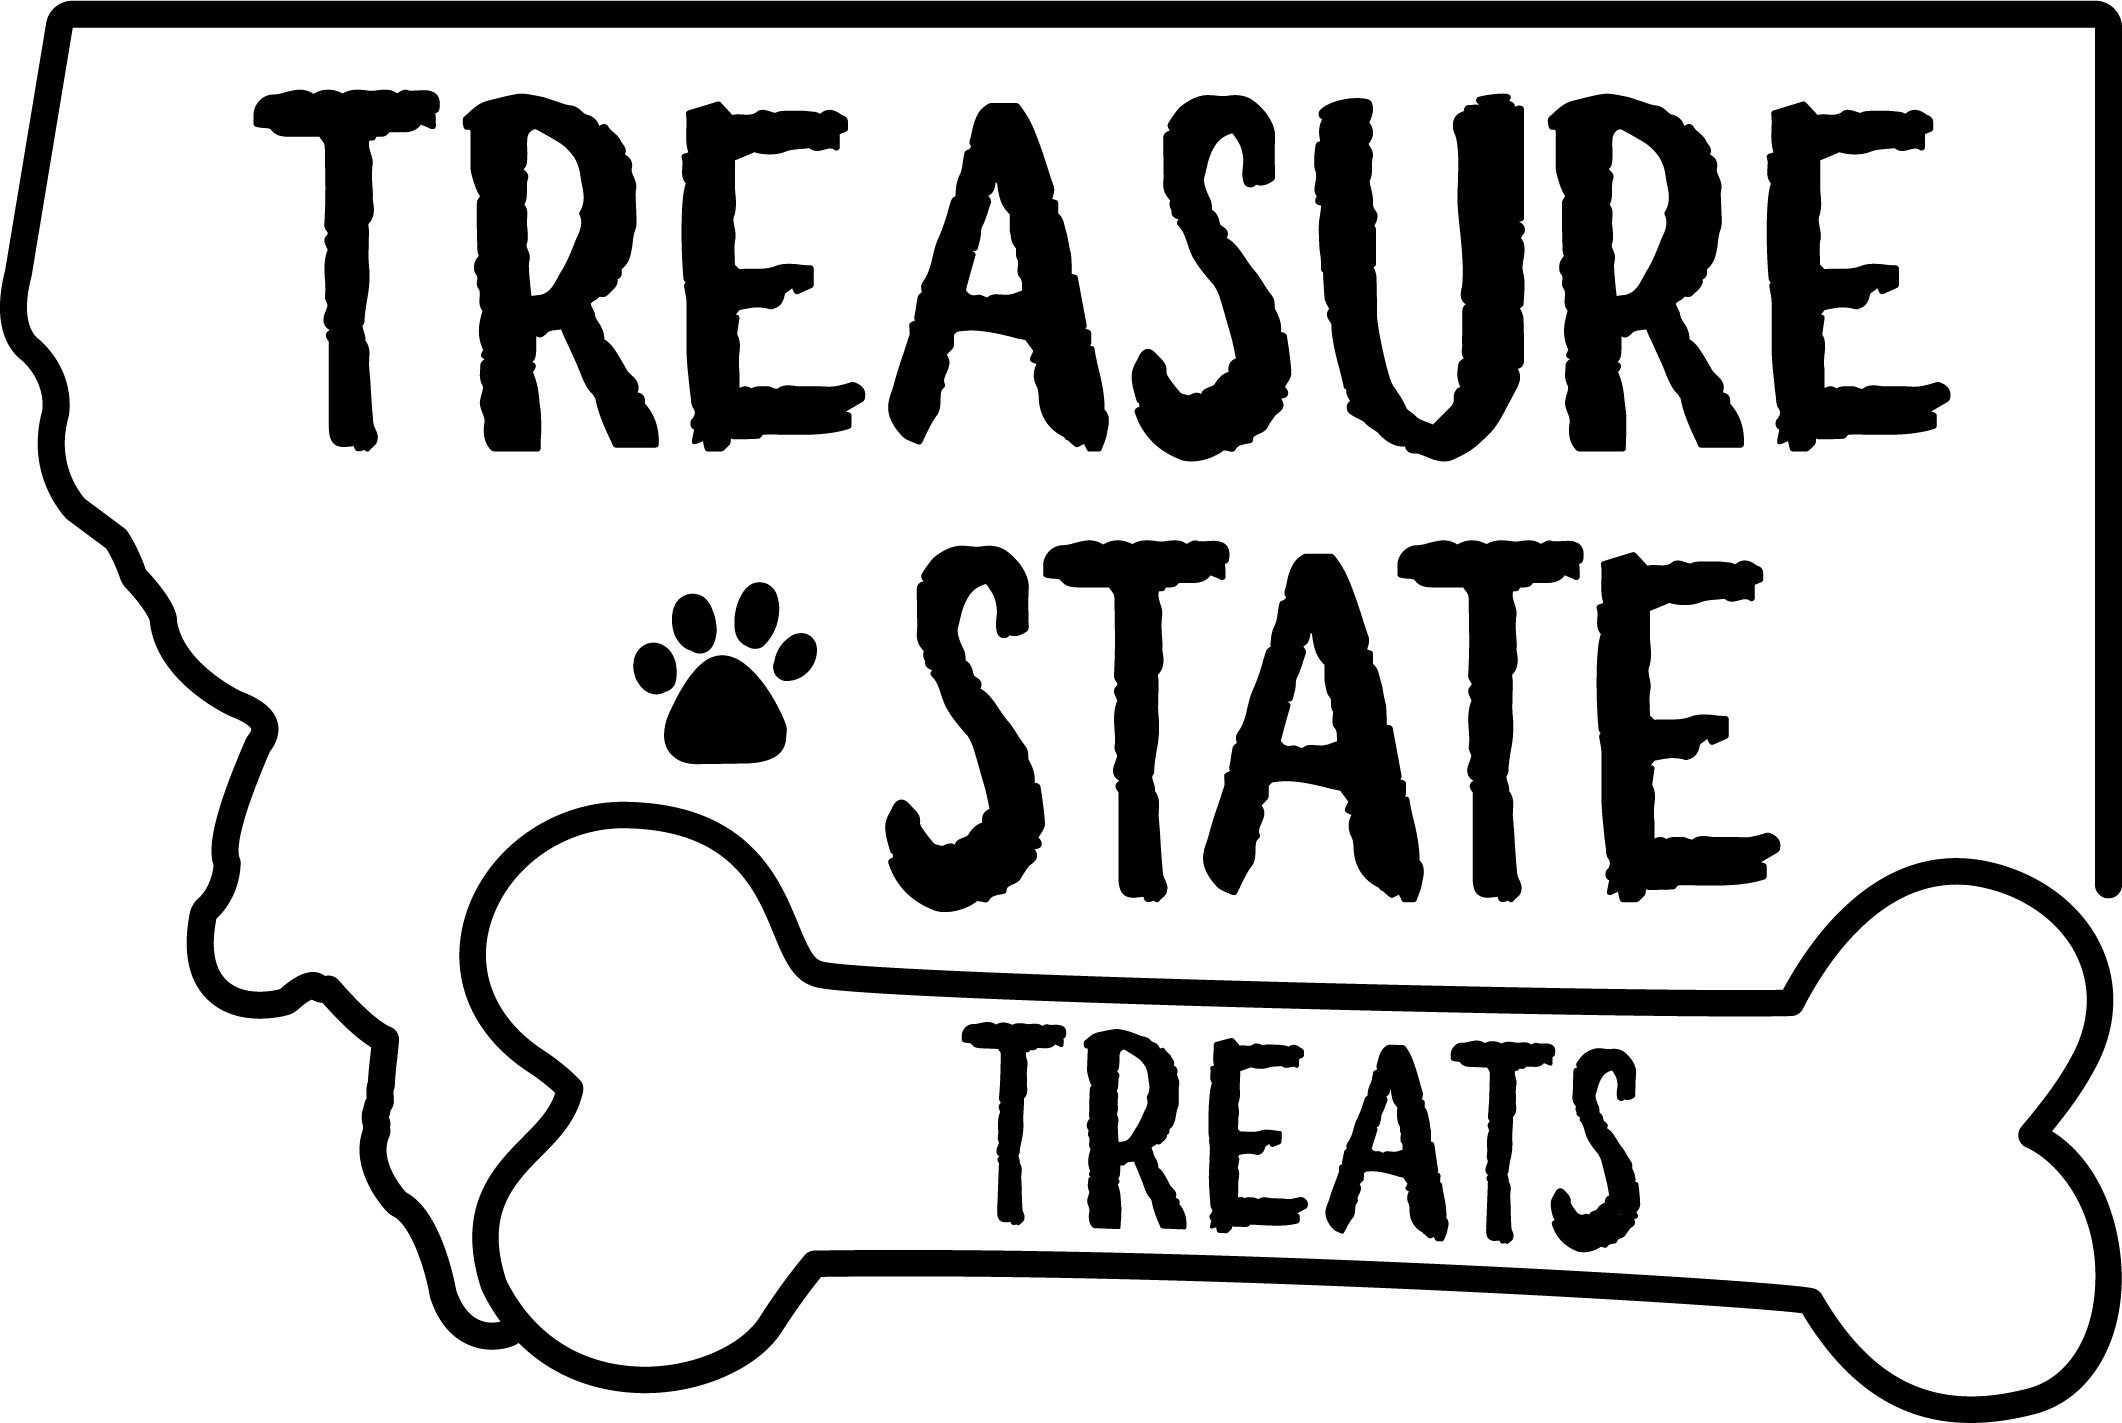 Treasure State Treats